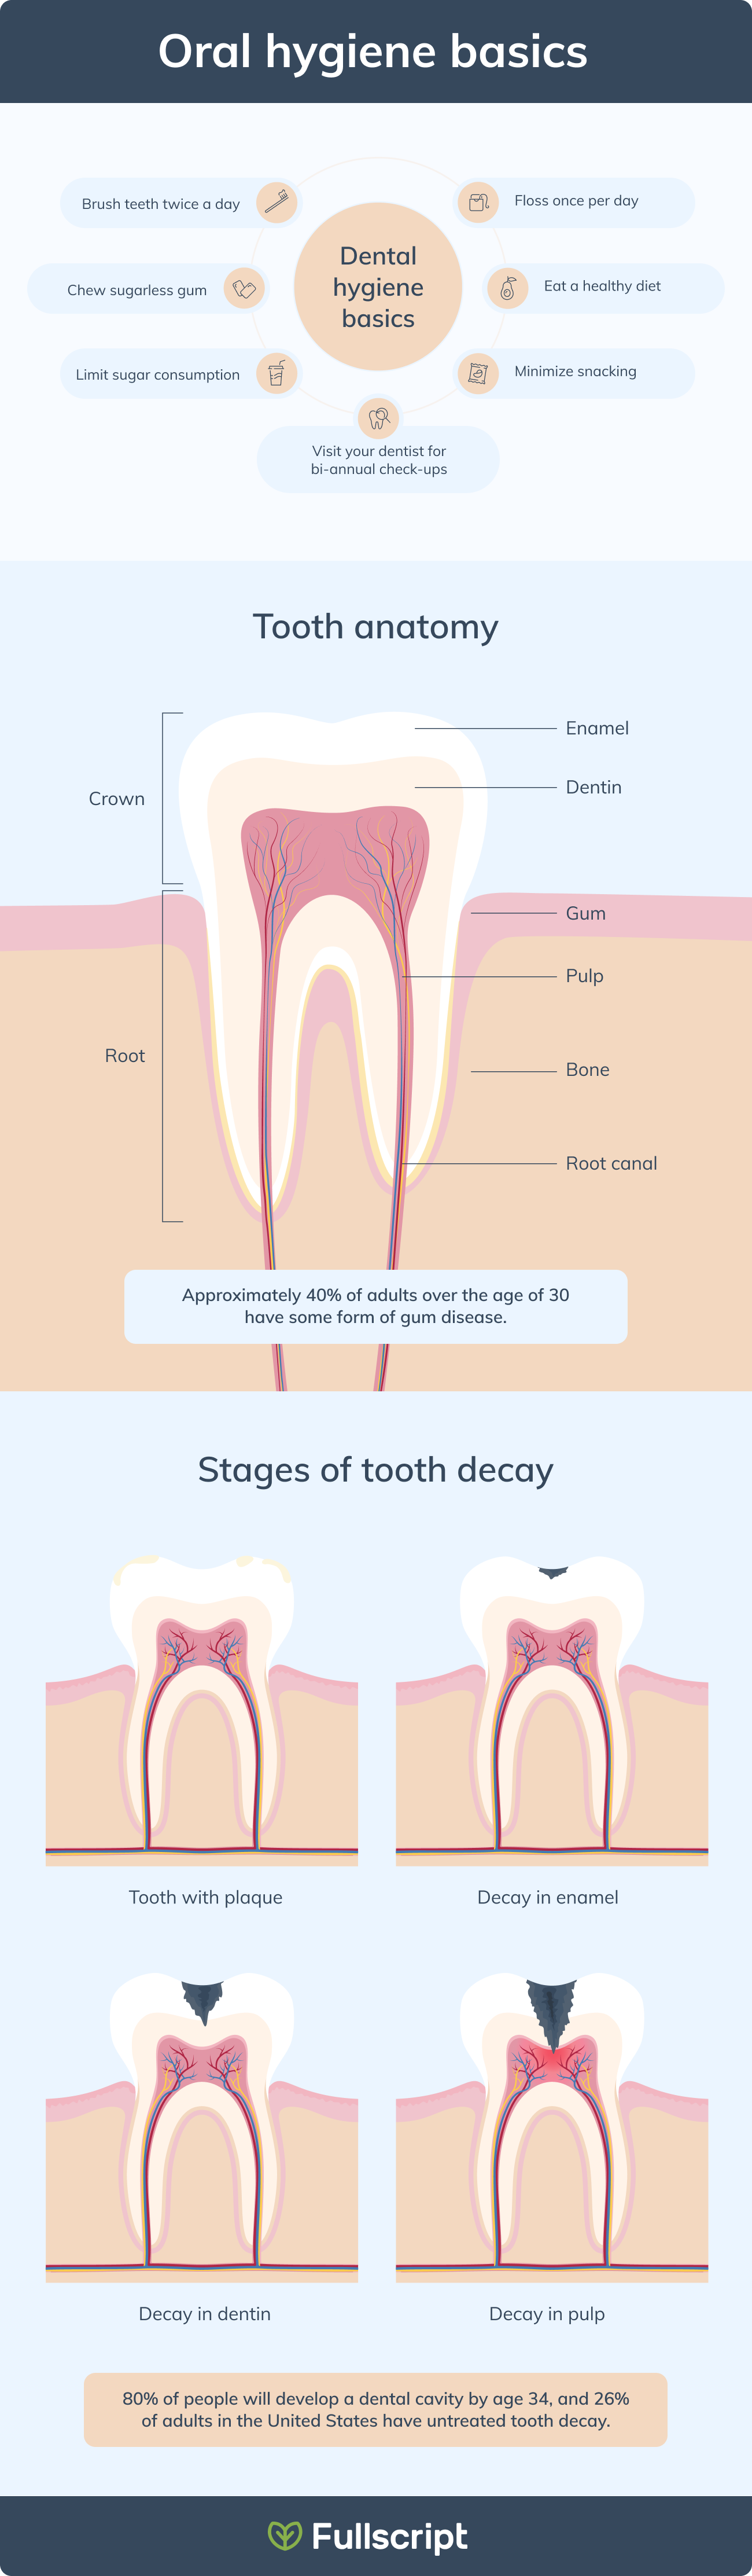 why is oral health important oral hygiene basics